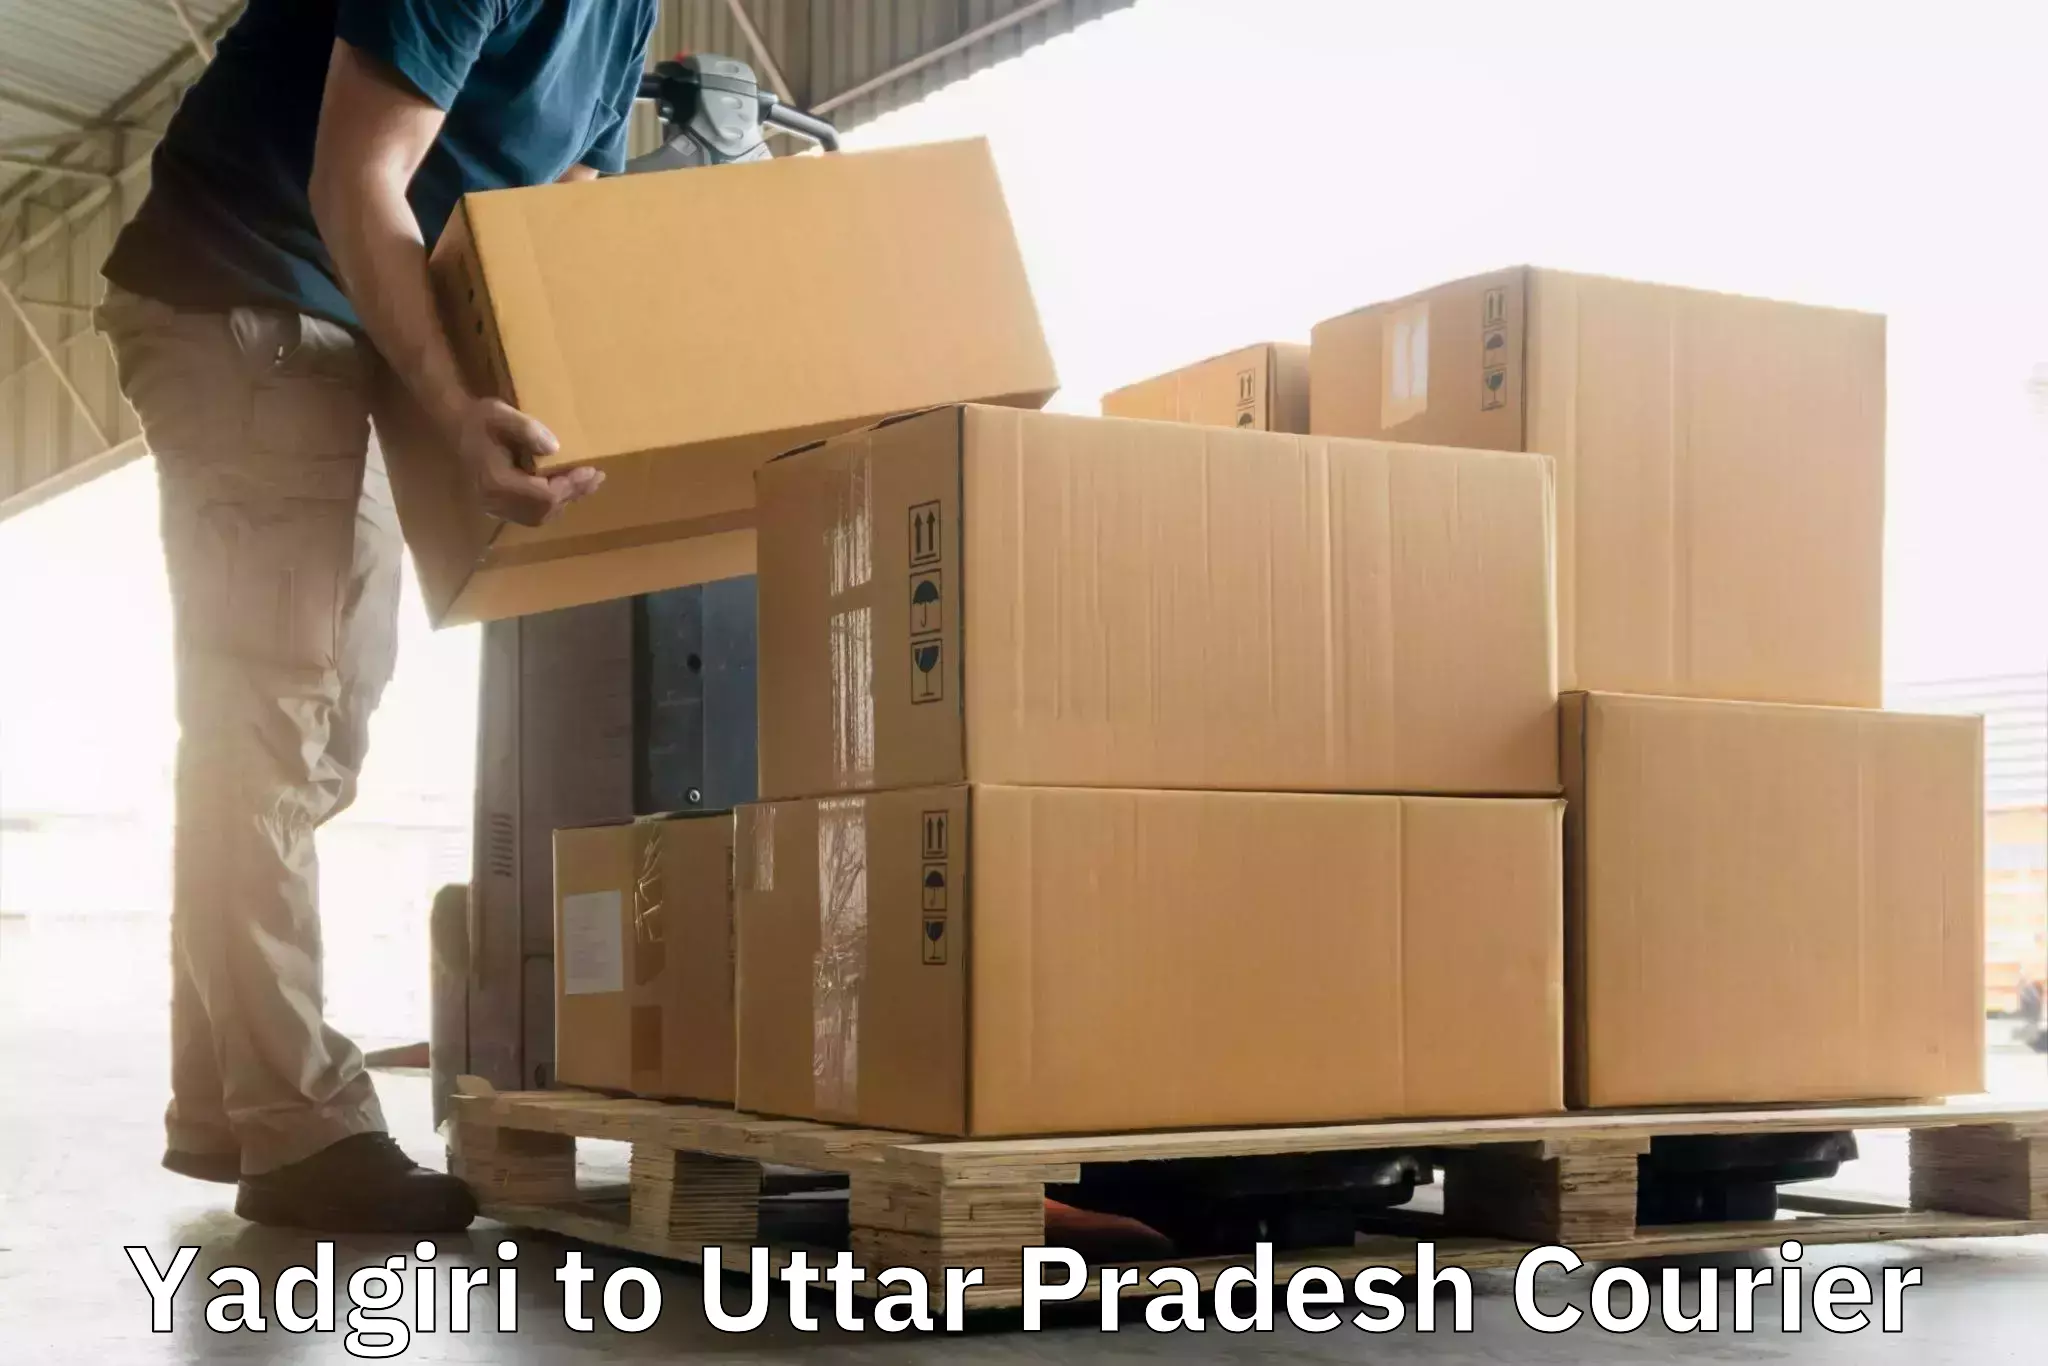 24-hour courier service Yadgiri to Varanasi